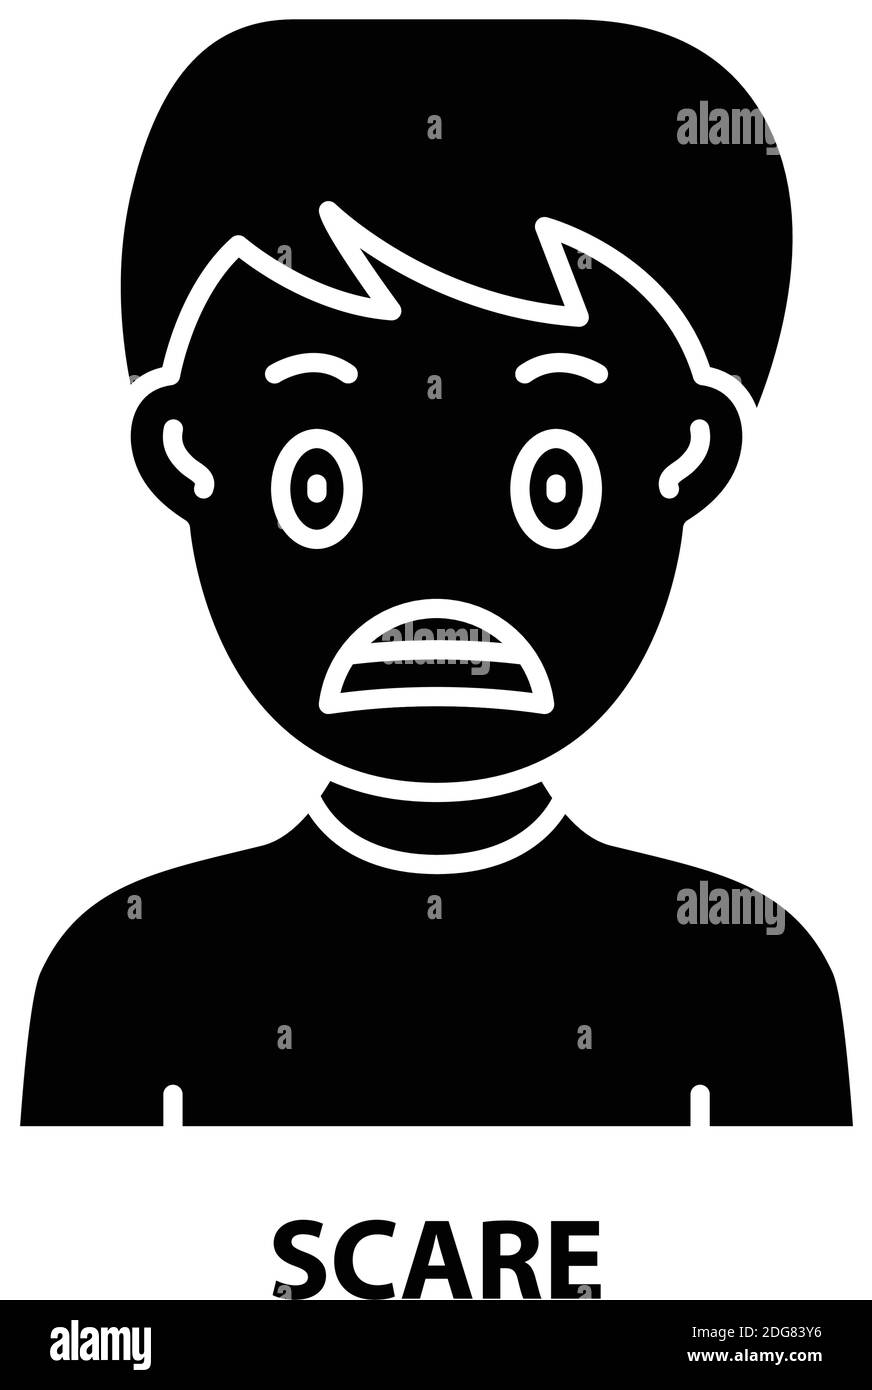 scare icon, black vector sign with editable strokes, concept illustration Stock Vector